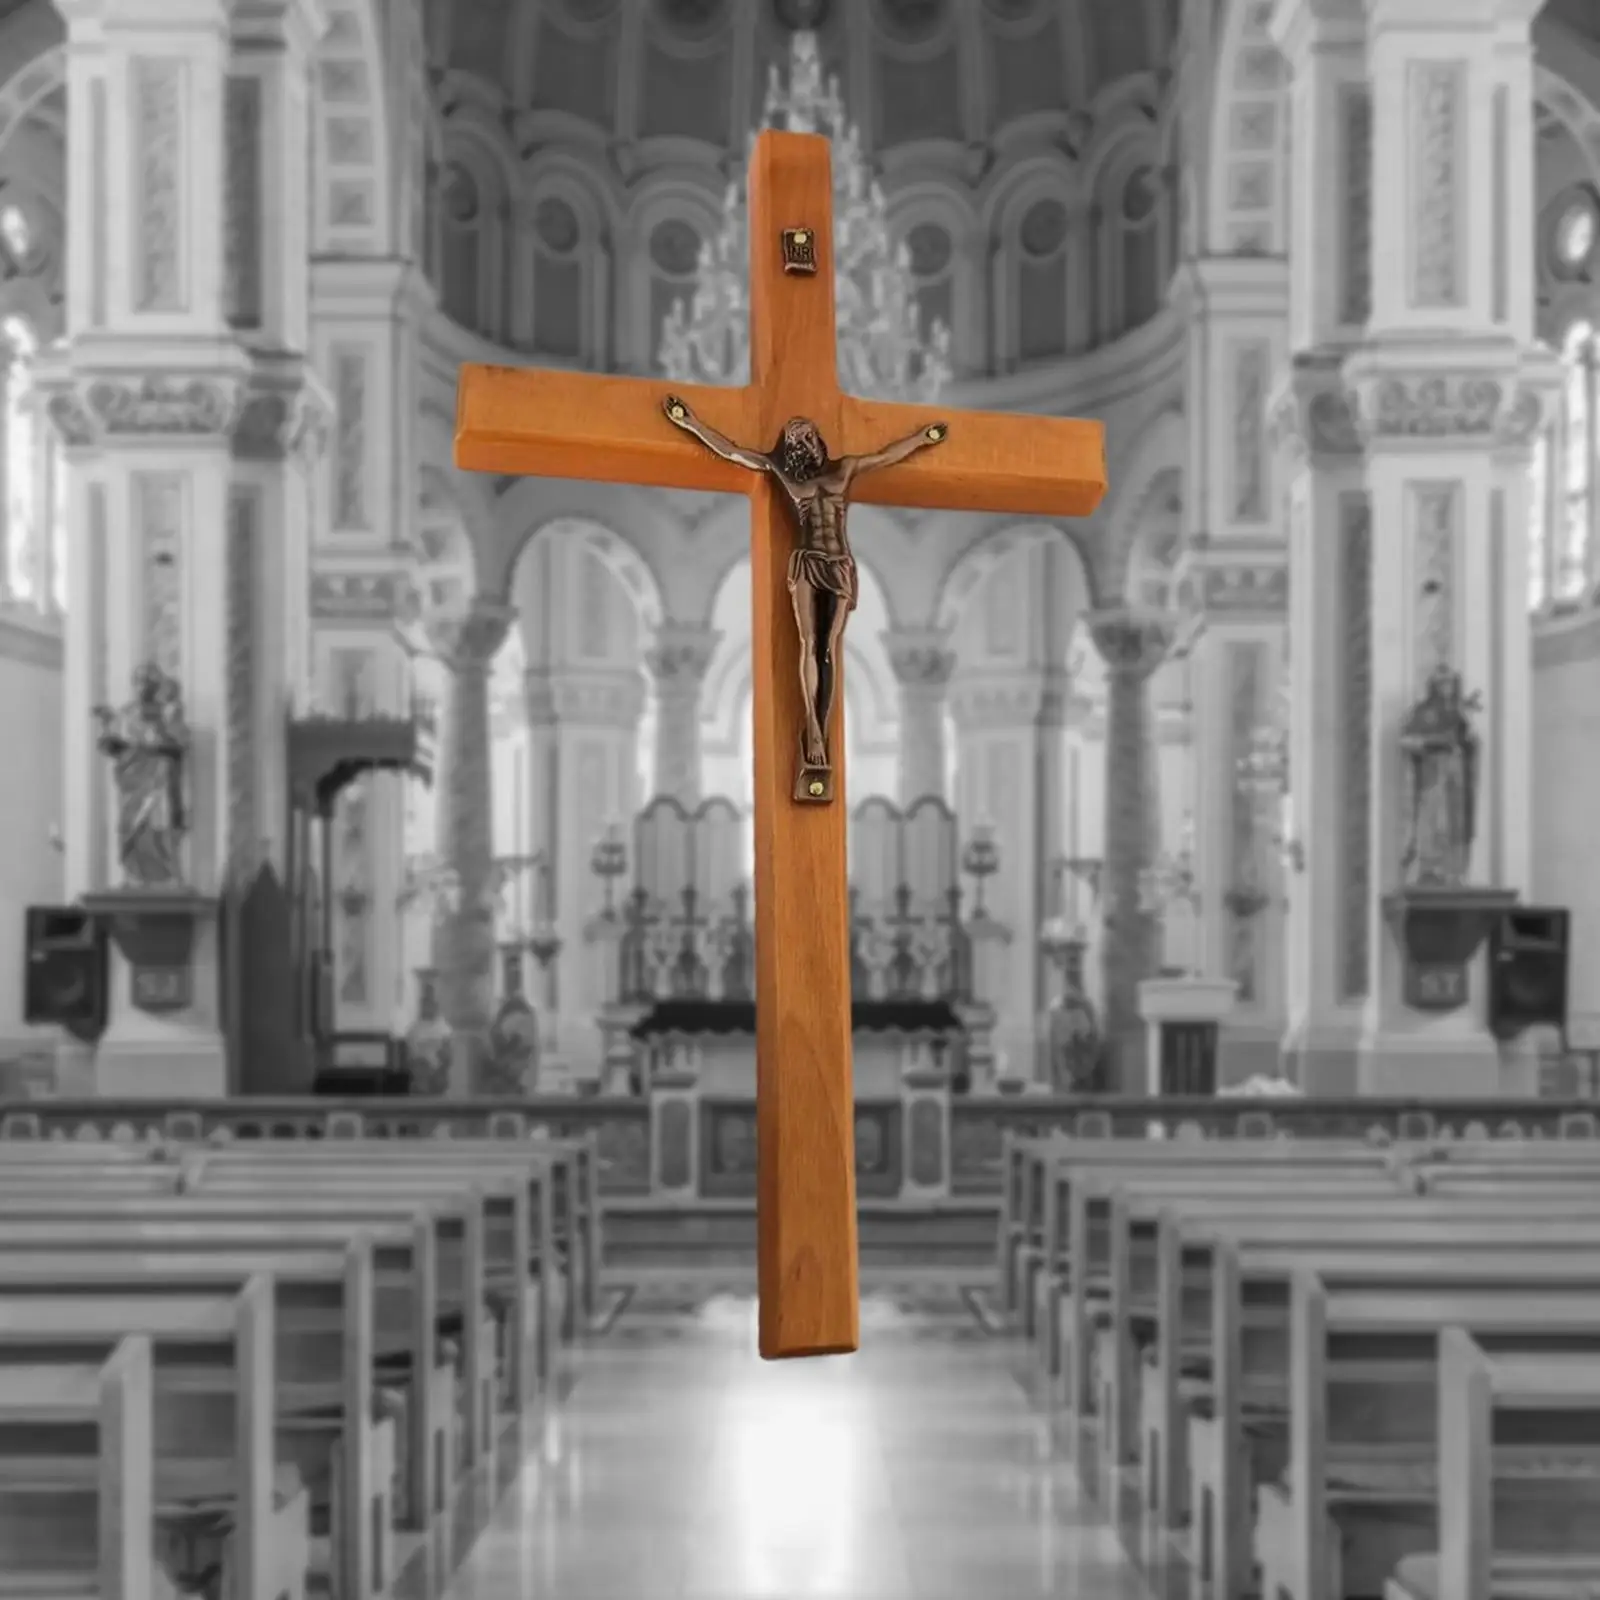 Religious Wooden Jesus Christ Crucifix Statue Catholic Figurine Wall Sculpture Church Ornament